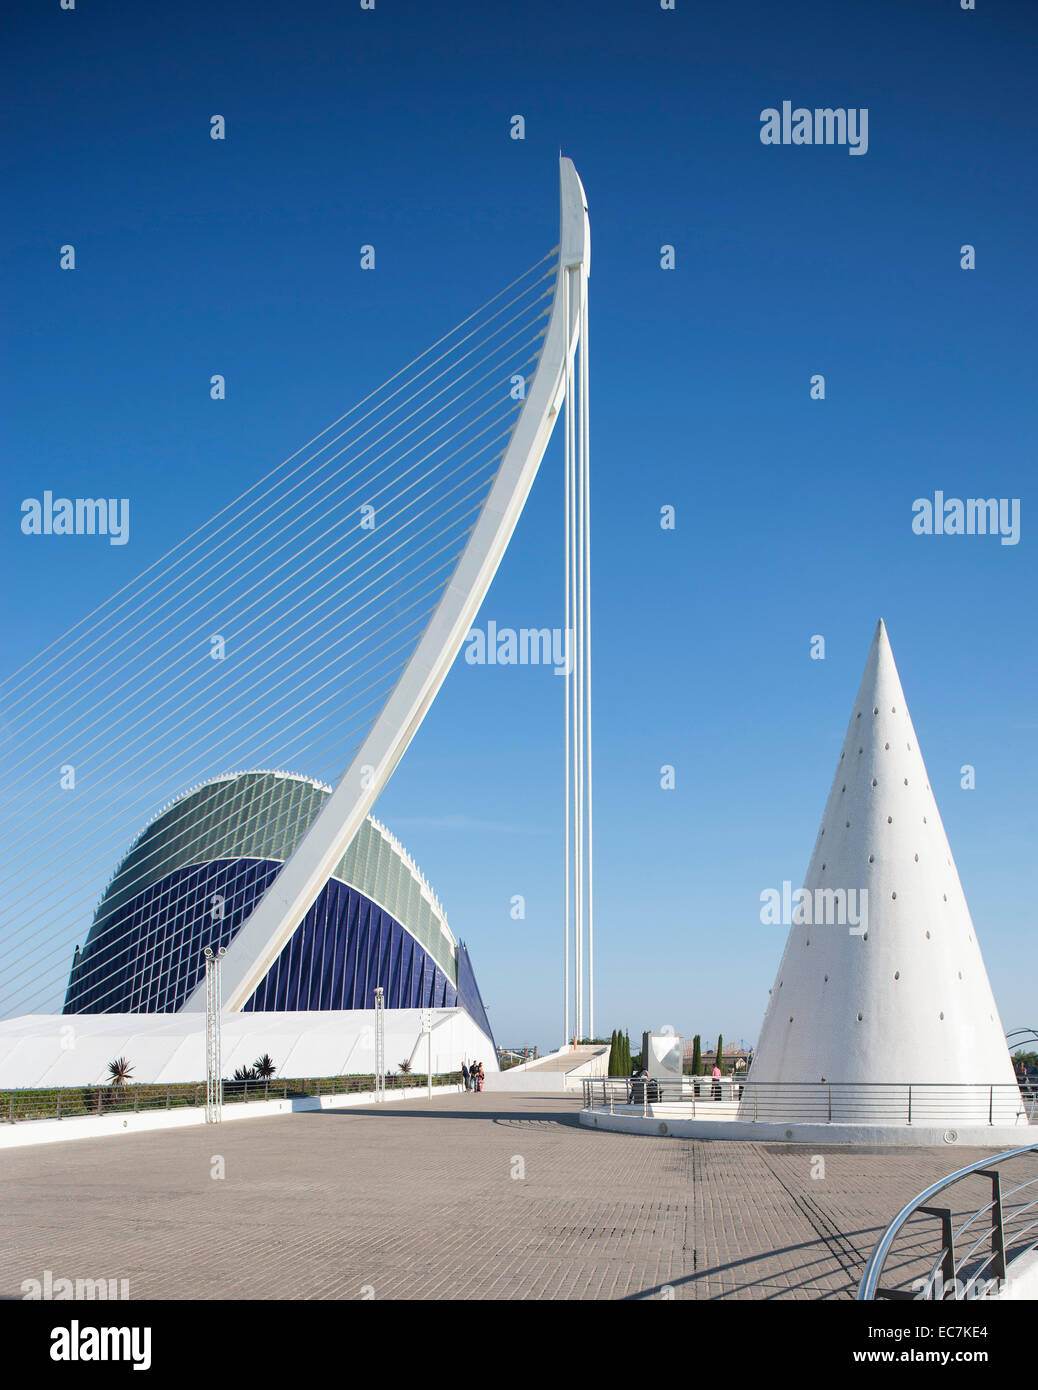 Spain, Valencia, City of Arts and Sciences, bridge Puente del Grao and L'Agora Stock Photo